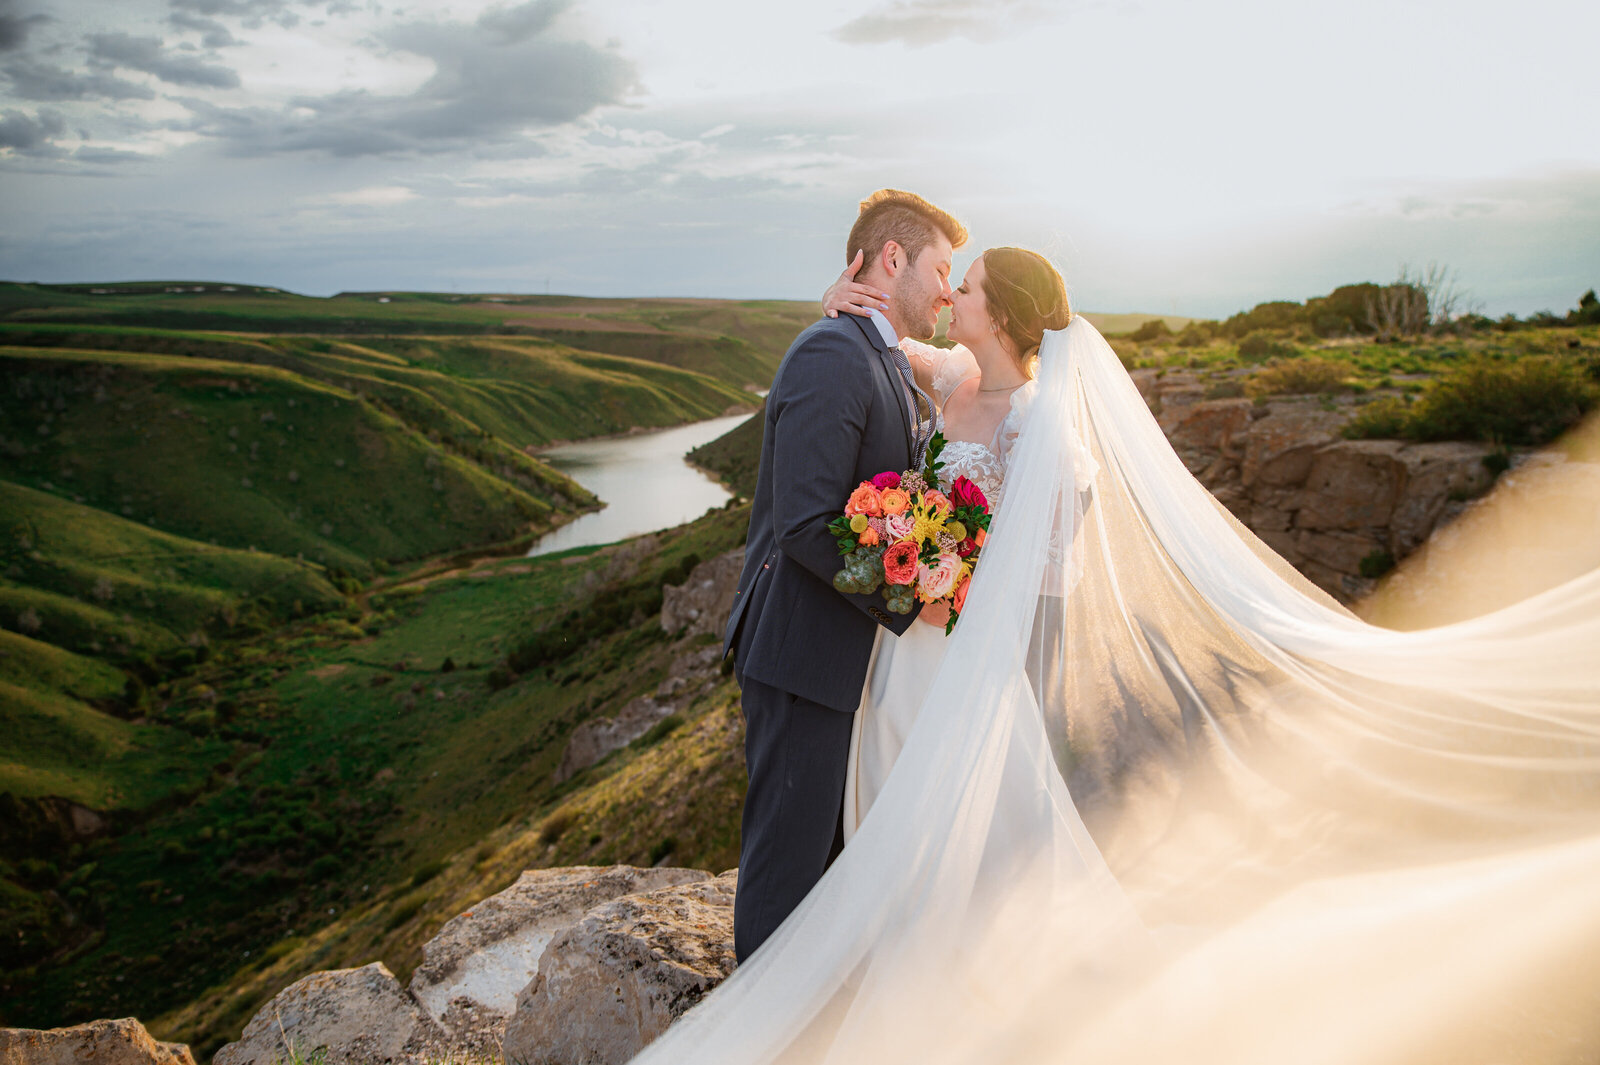 Jackson Hole photographers capture sunrise portraits of bride and groom